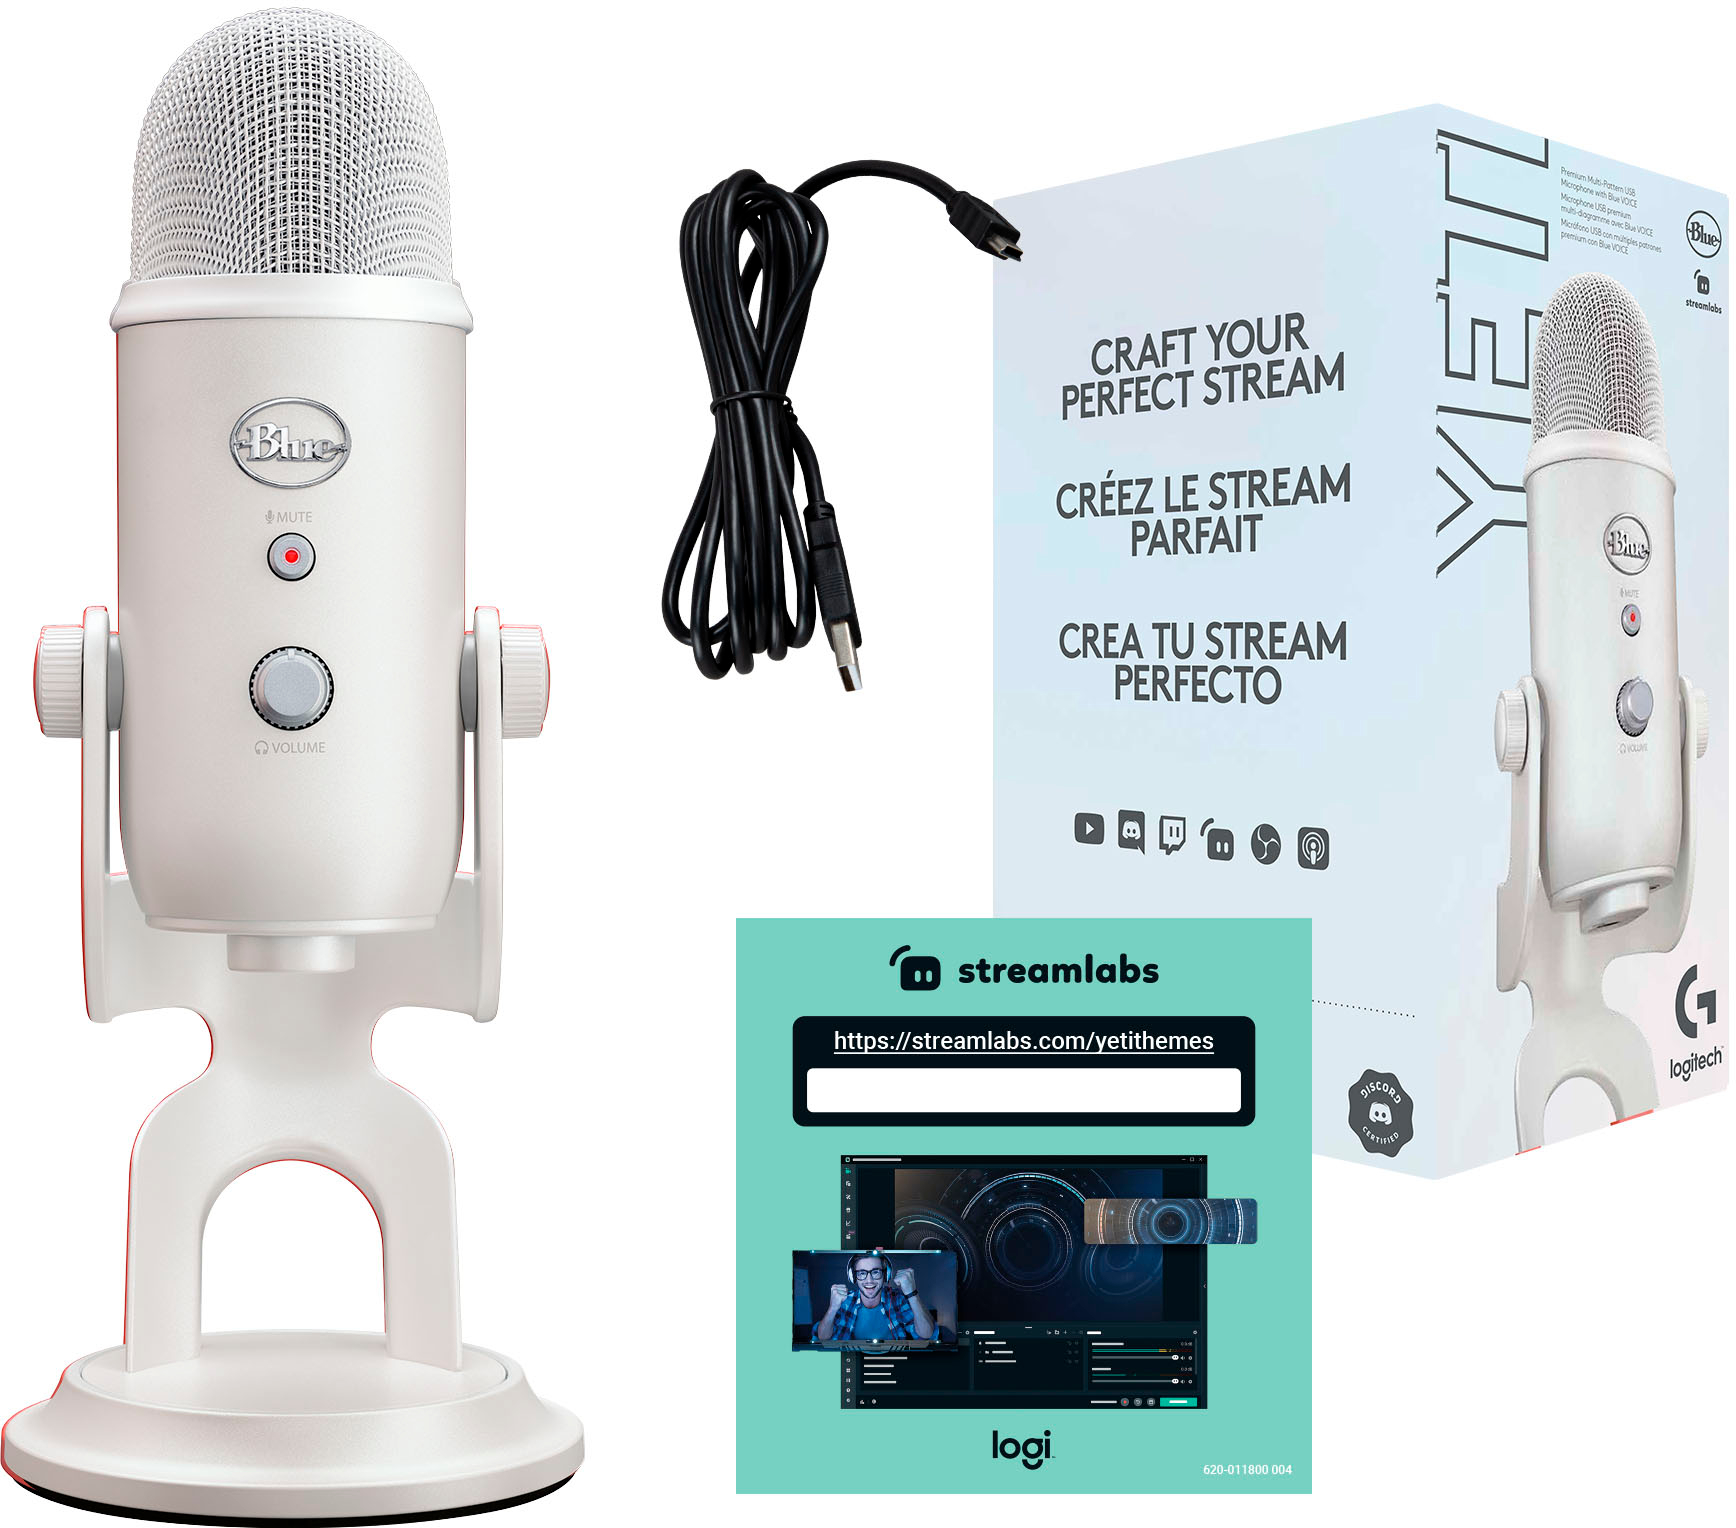 Blue Microphones Blue Yeti Professional Multi-Pattern USB Condenser  Microphone 988-000100 - Best Buy